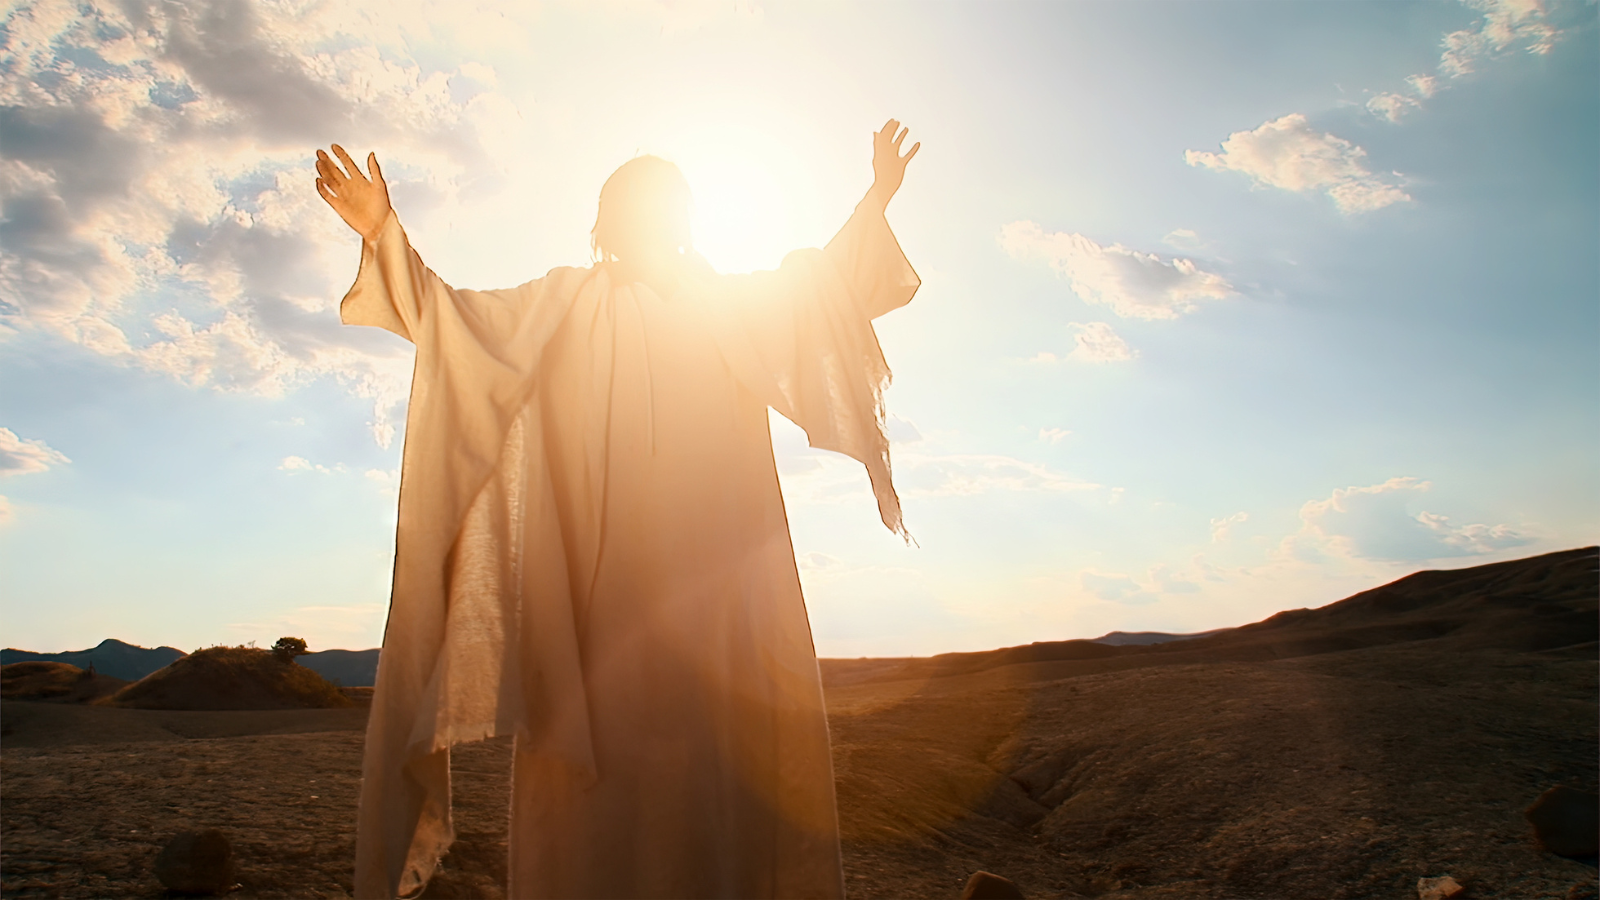 An image of Jesus standing in sunlight.